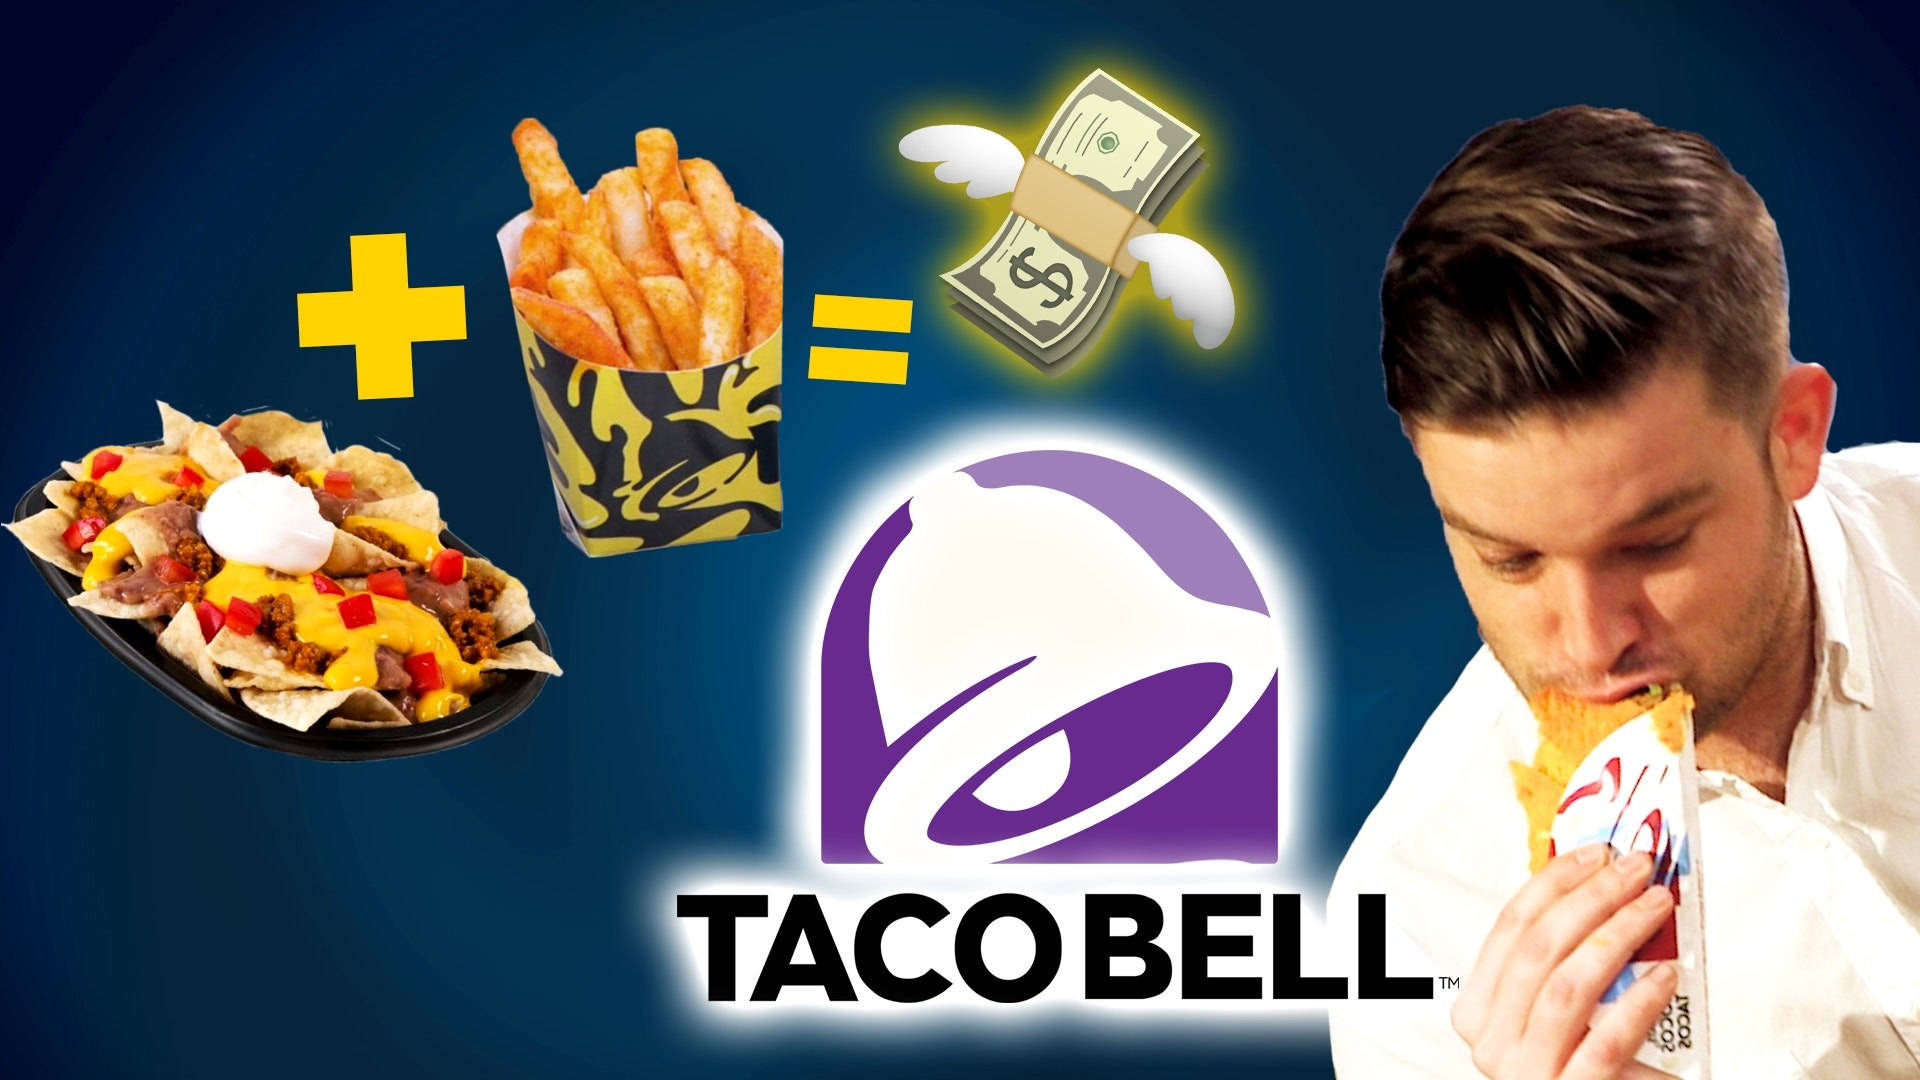 Taco Bell Funny Poster Wallpaper